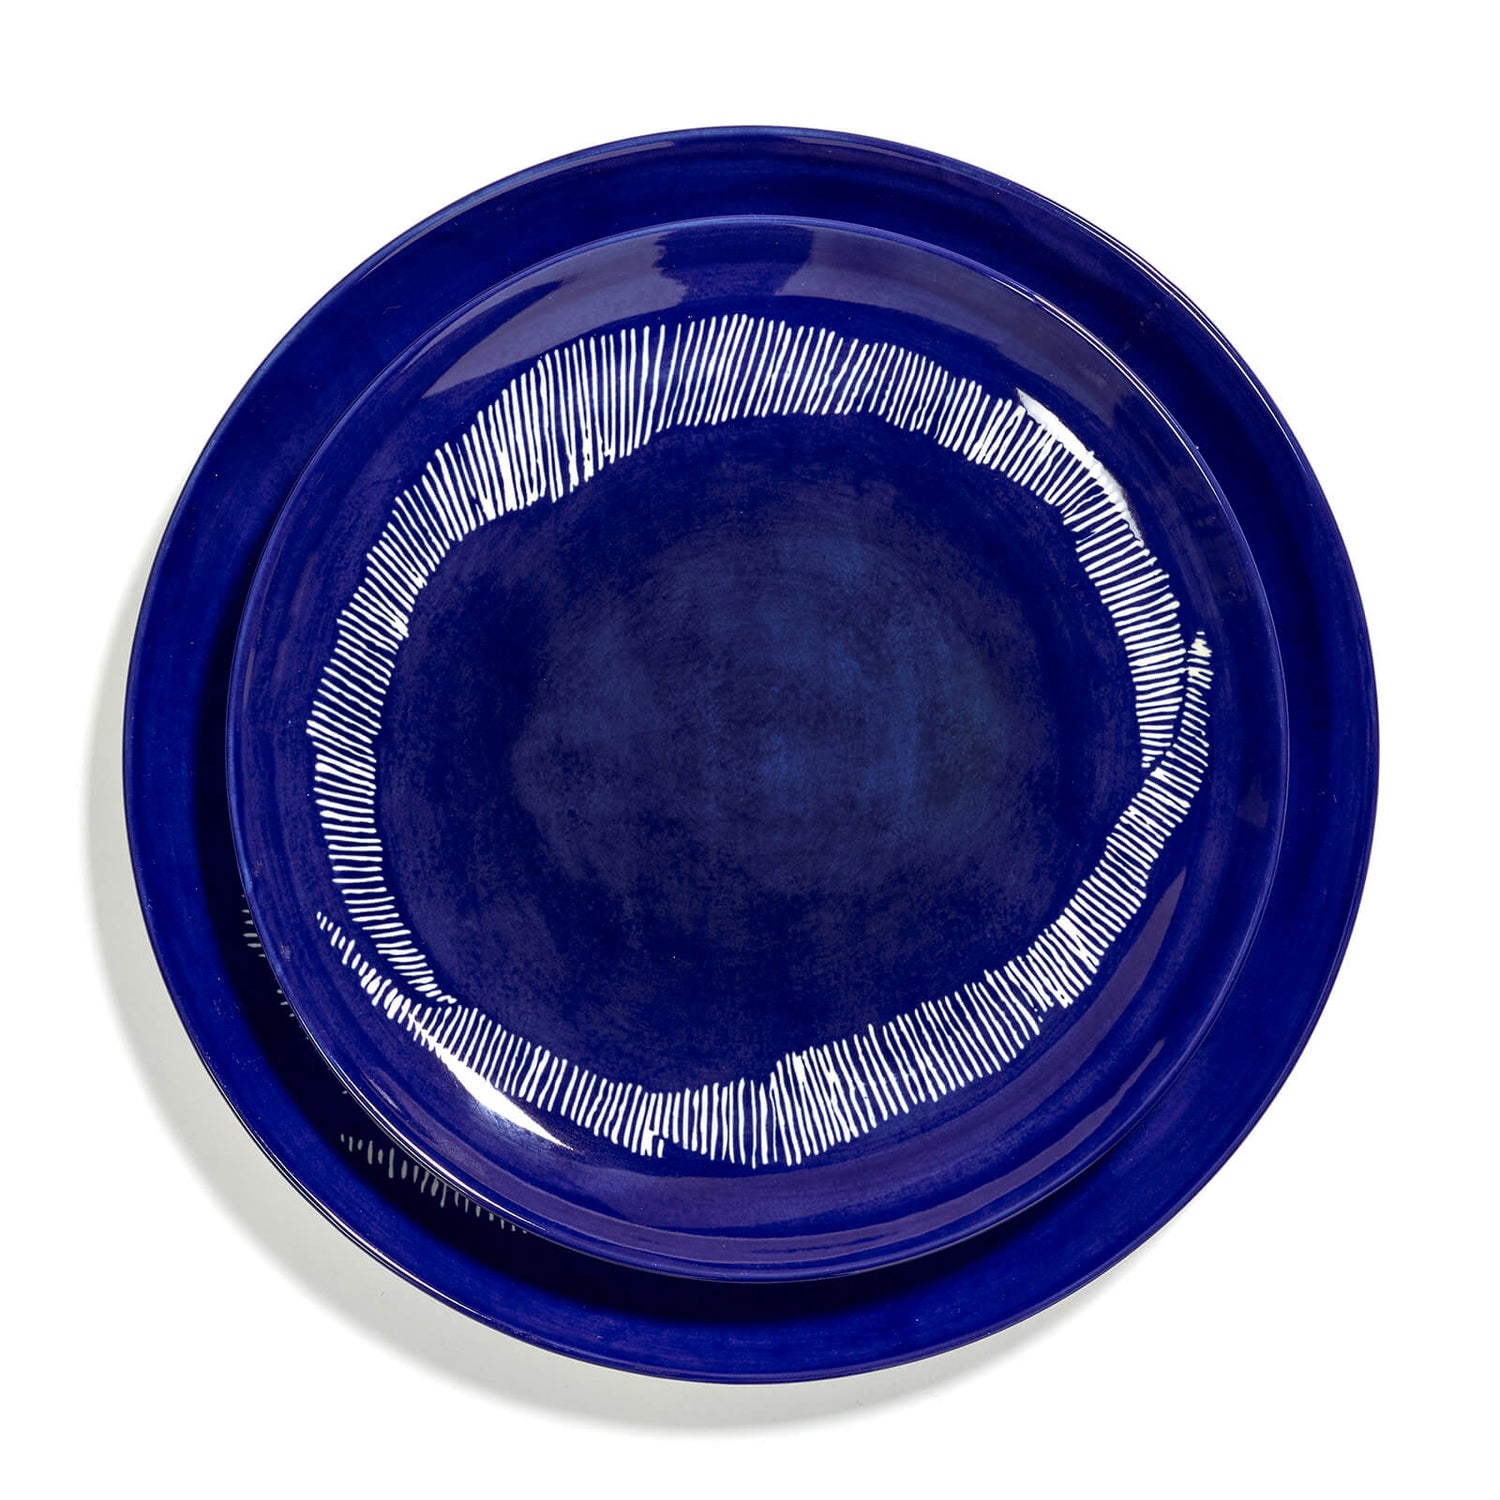 Serax x Ottolenghi Medium Plate - Lapis Lazuli & Swirl White (Set of 2)